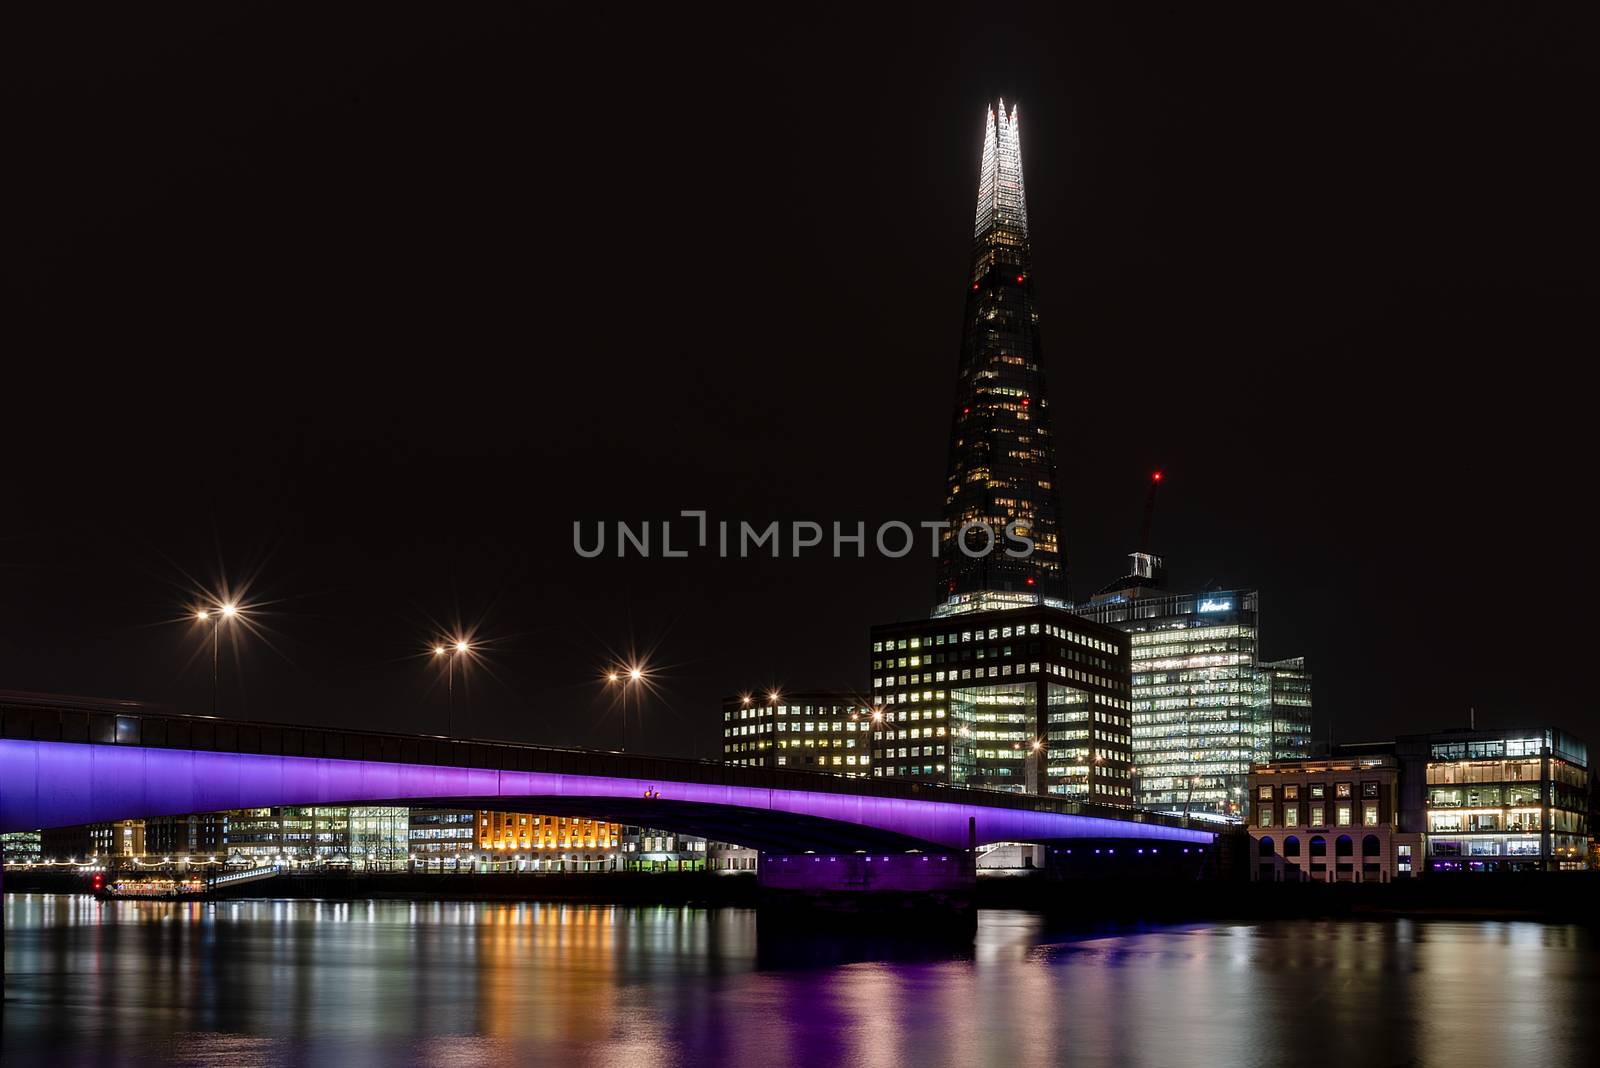 London, UK - Jan 2020: The Shard and London Bridge illuminated and reflecting in the Thames